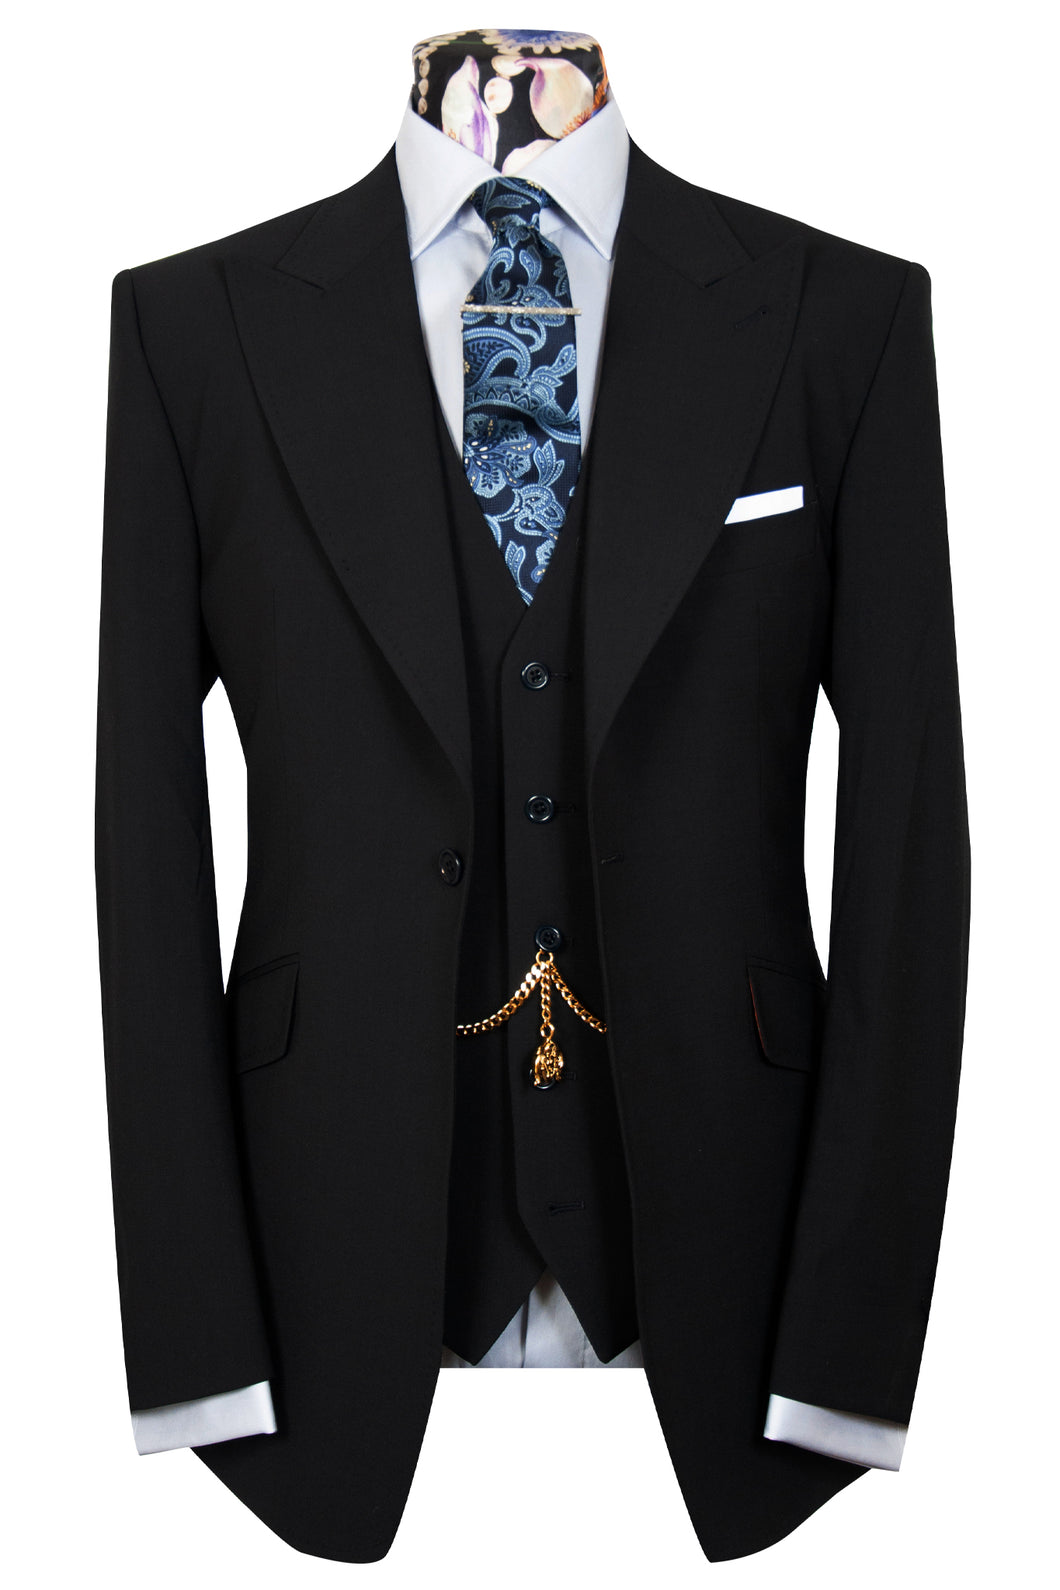 The Ealing Classic Black Suit